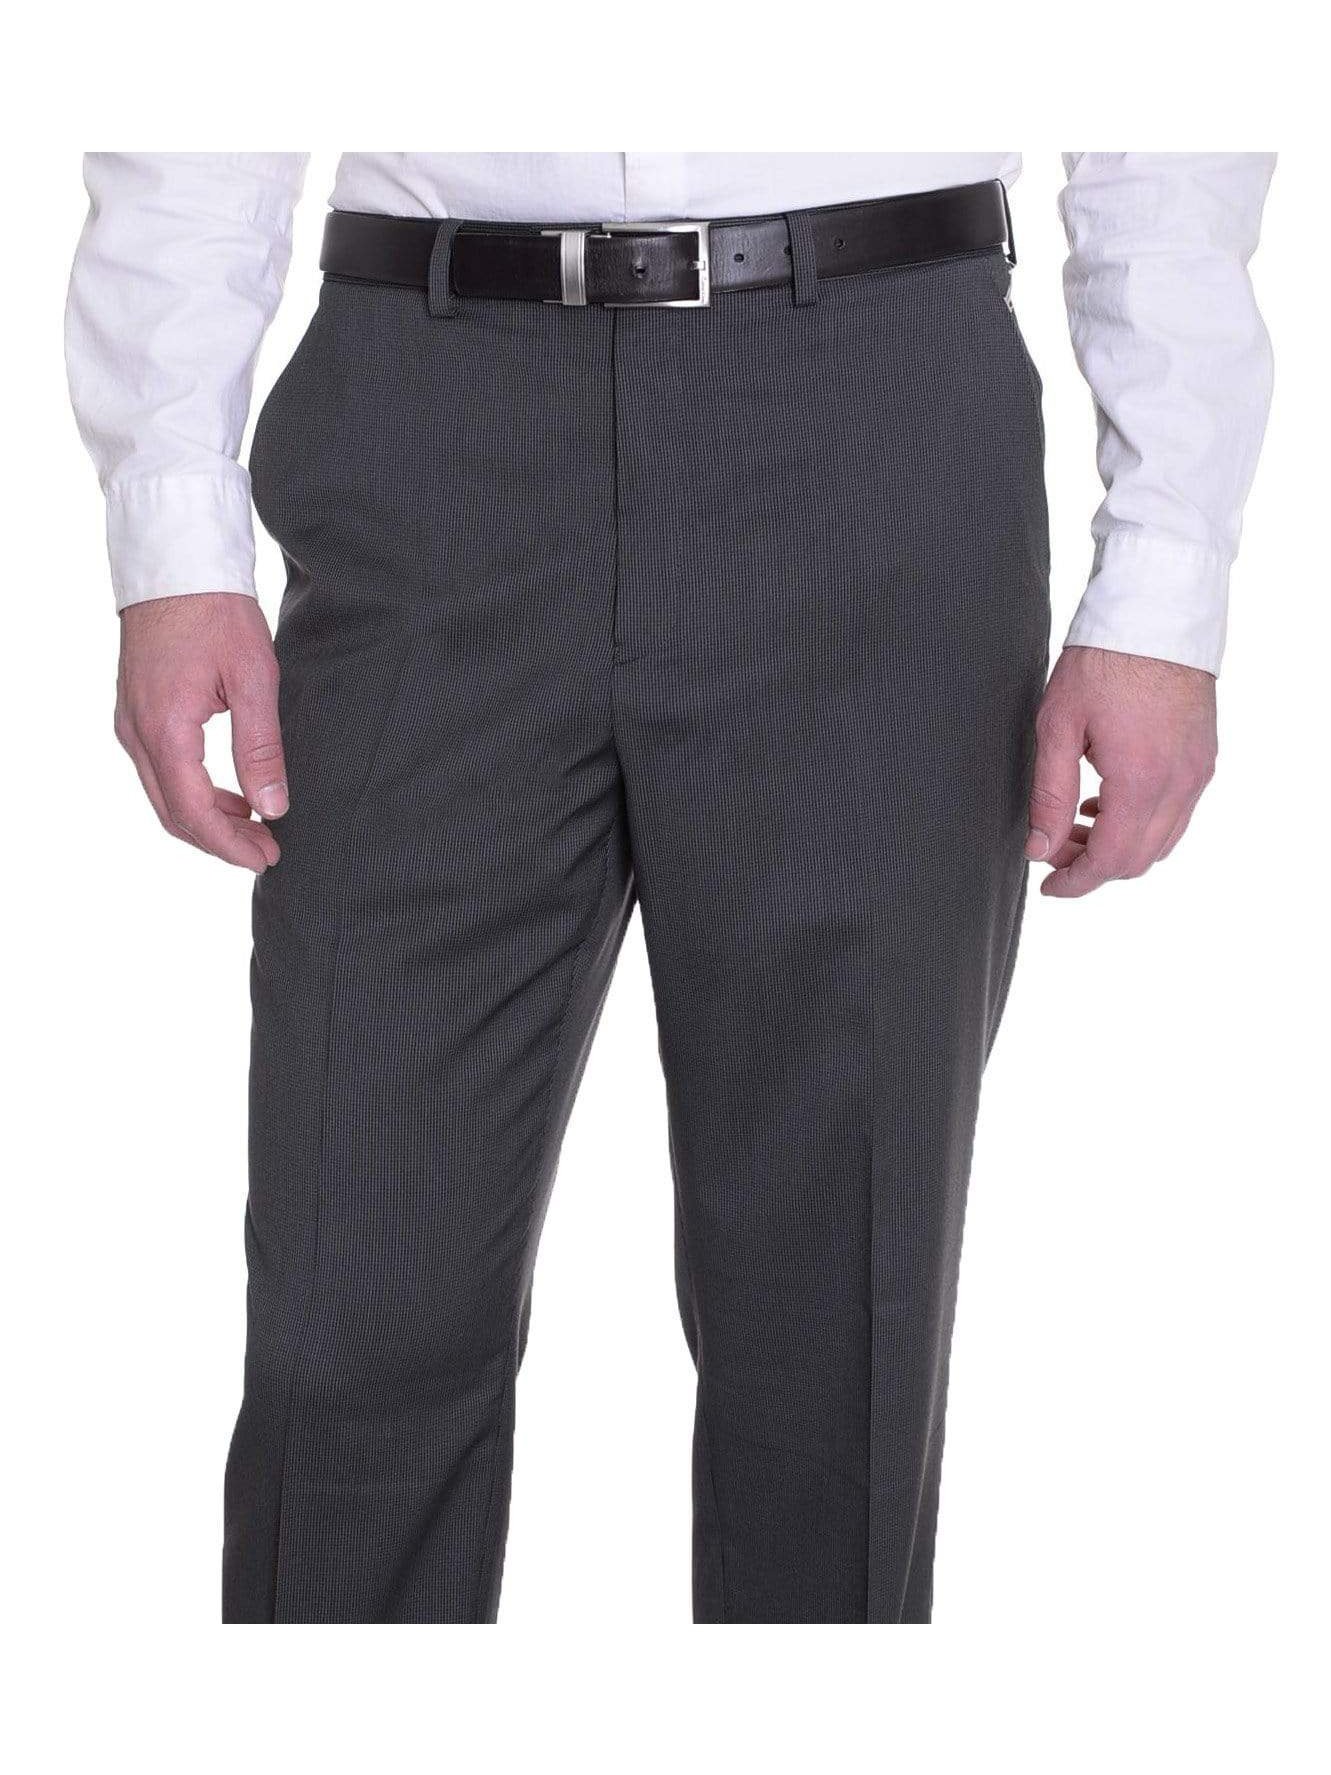 Michael Kors Mens ClassicFit Airsoft Stretch Light BlueNavy Birdseye  Suit Pants  Macys